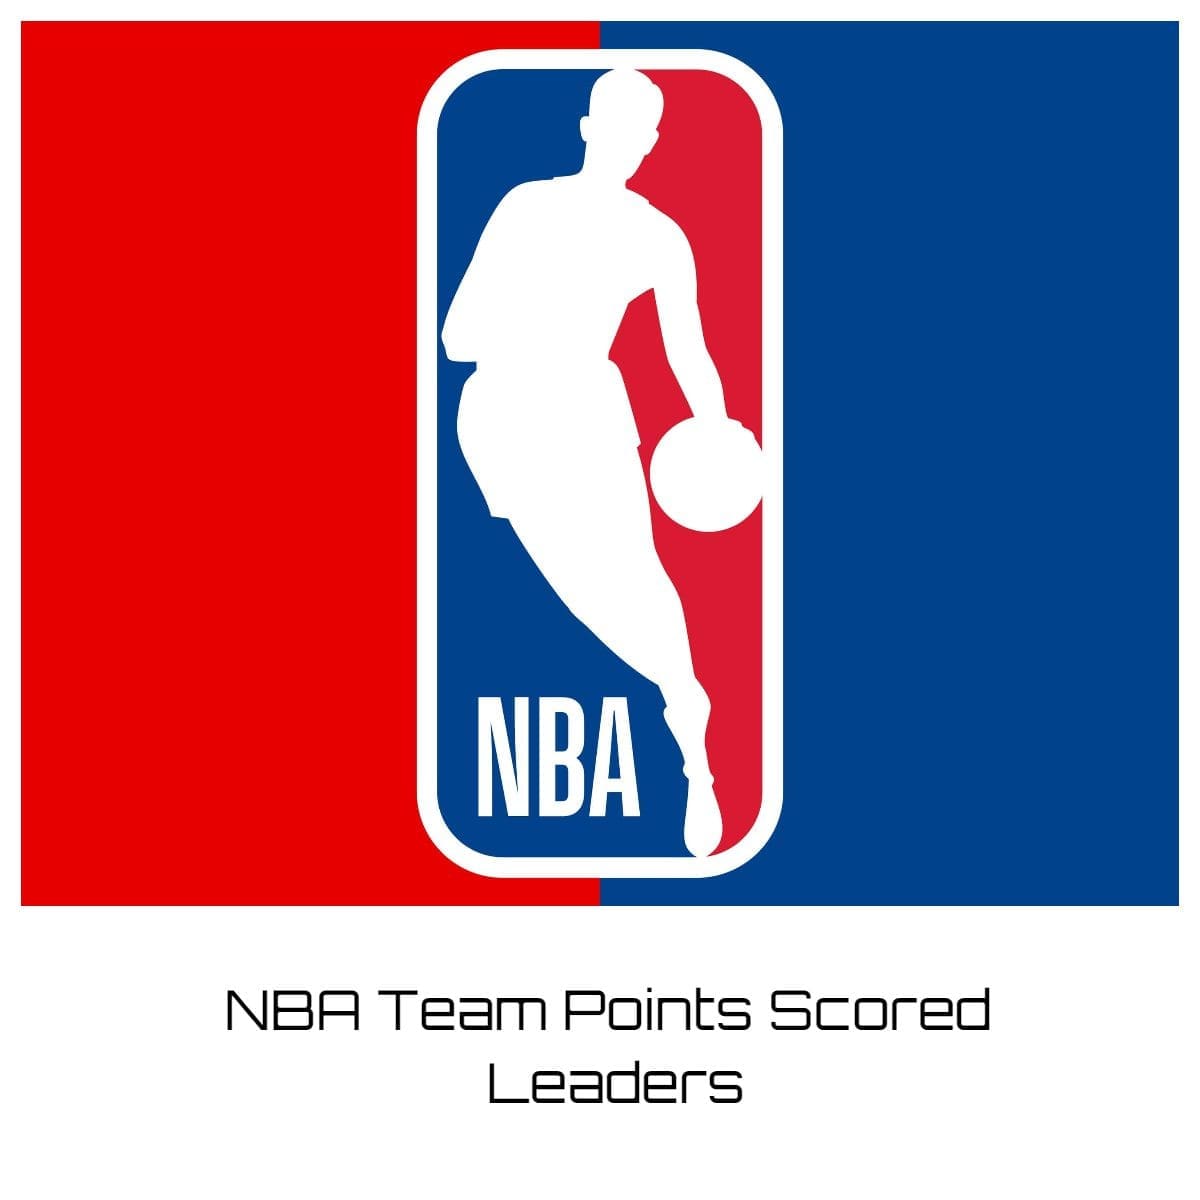 NBA Team Points Scored Leaders